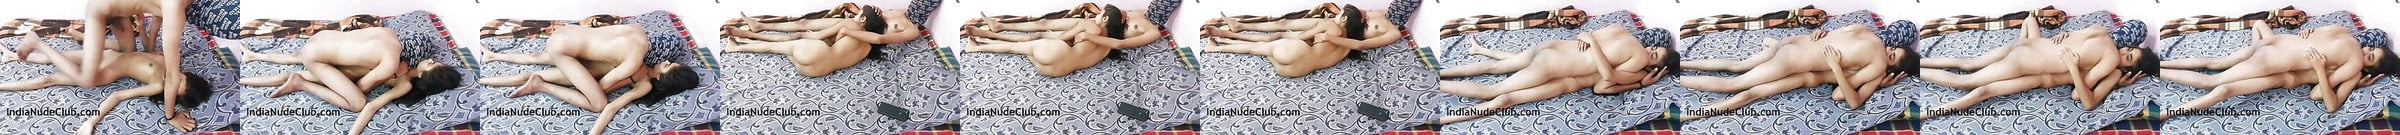 Indian School Girl 18 Porn Videos Xhamster